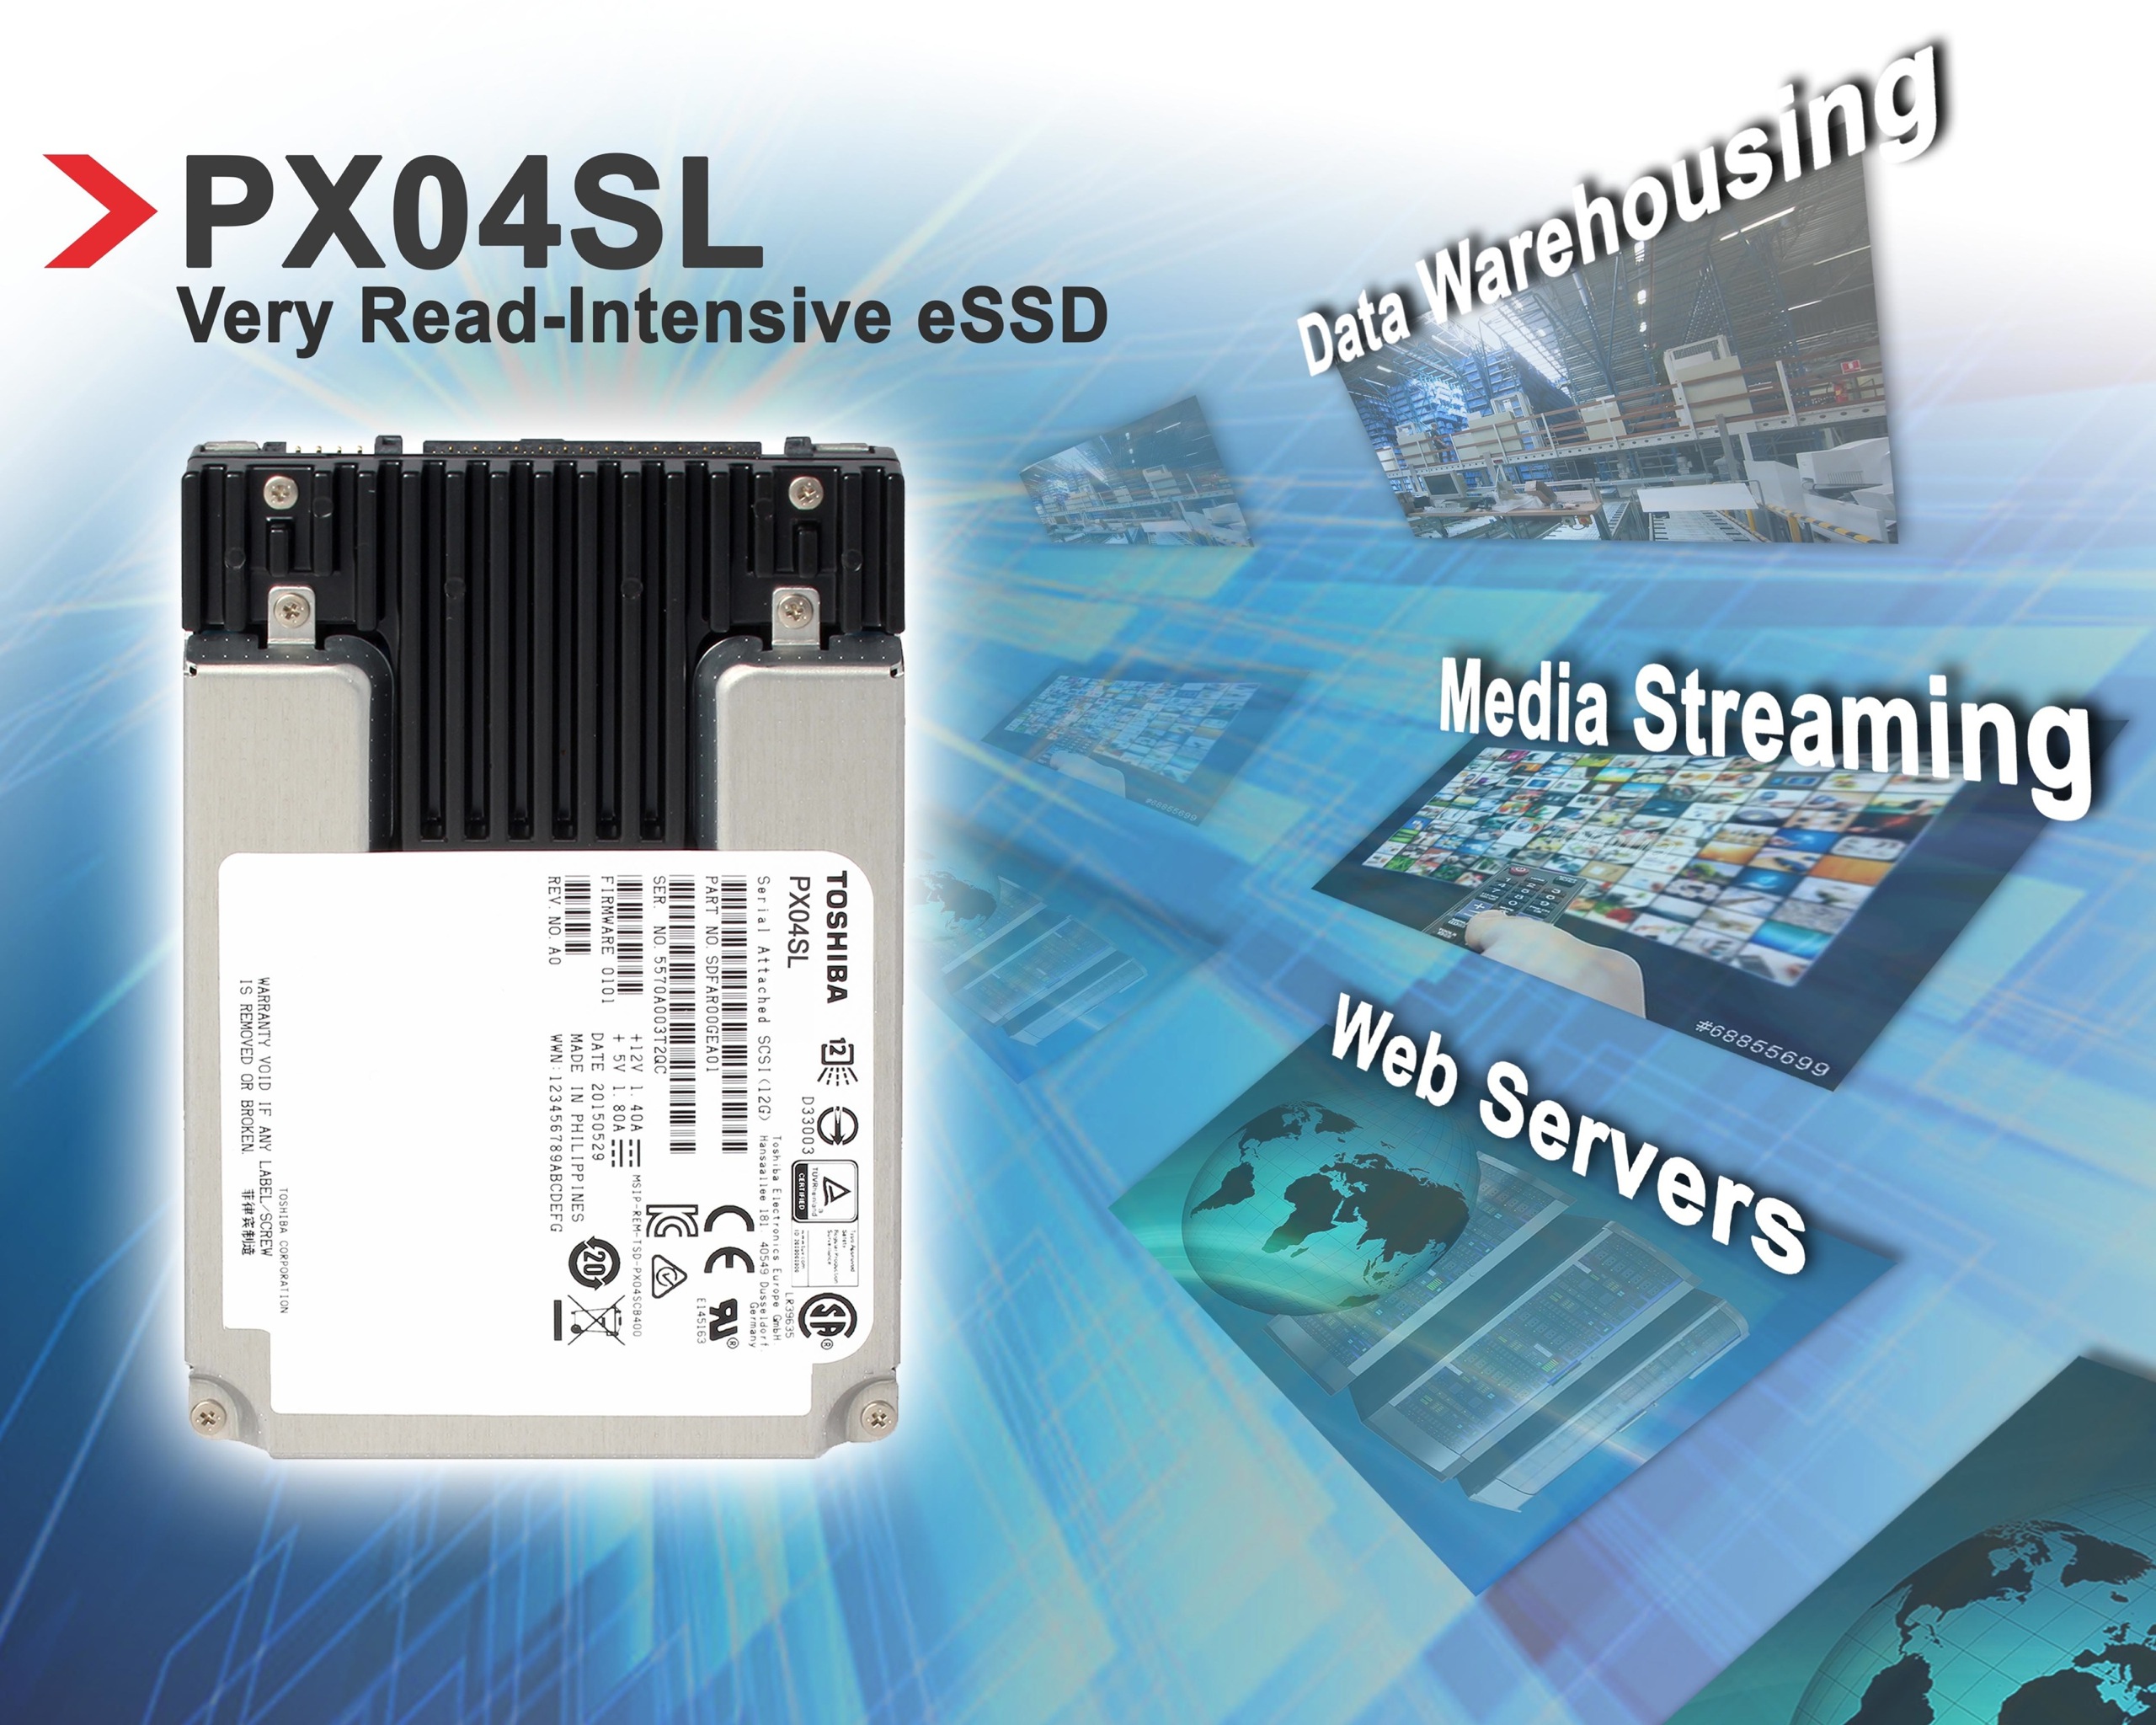 TOSHIBA推出高讀取密集型企業級SAS 固態硬碟PX04SL系列